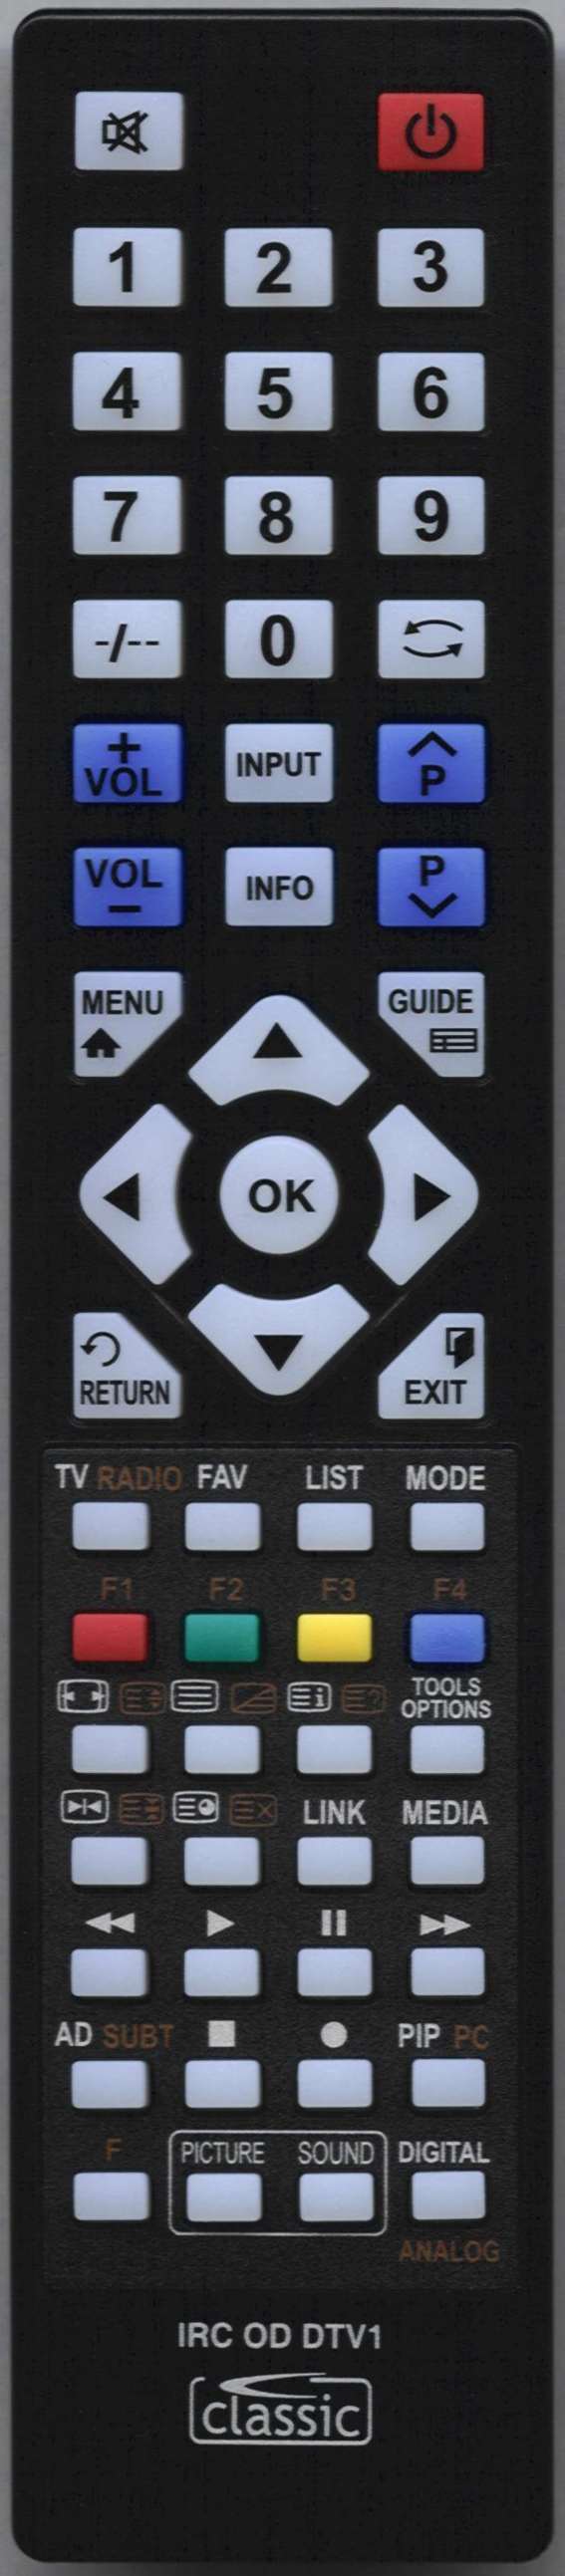 JVC RM-C2500-1C Remote Control